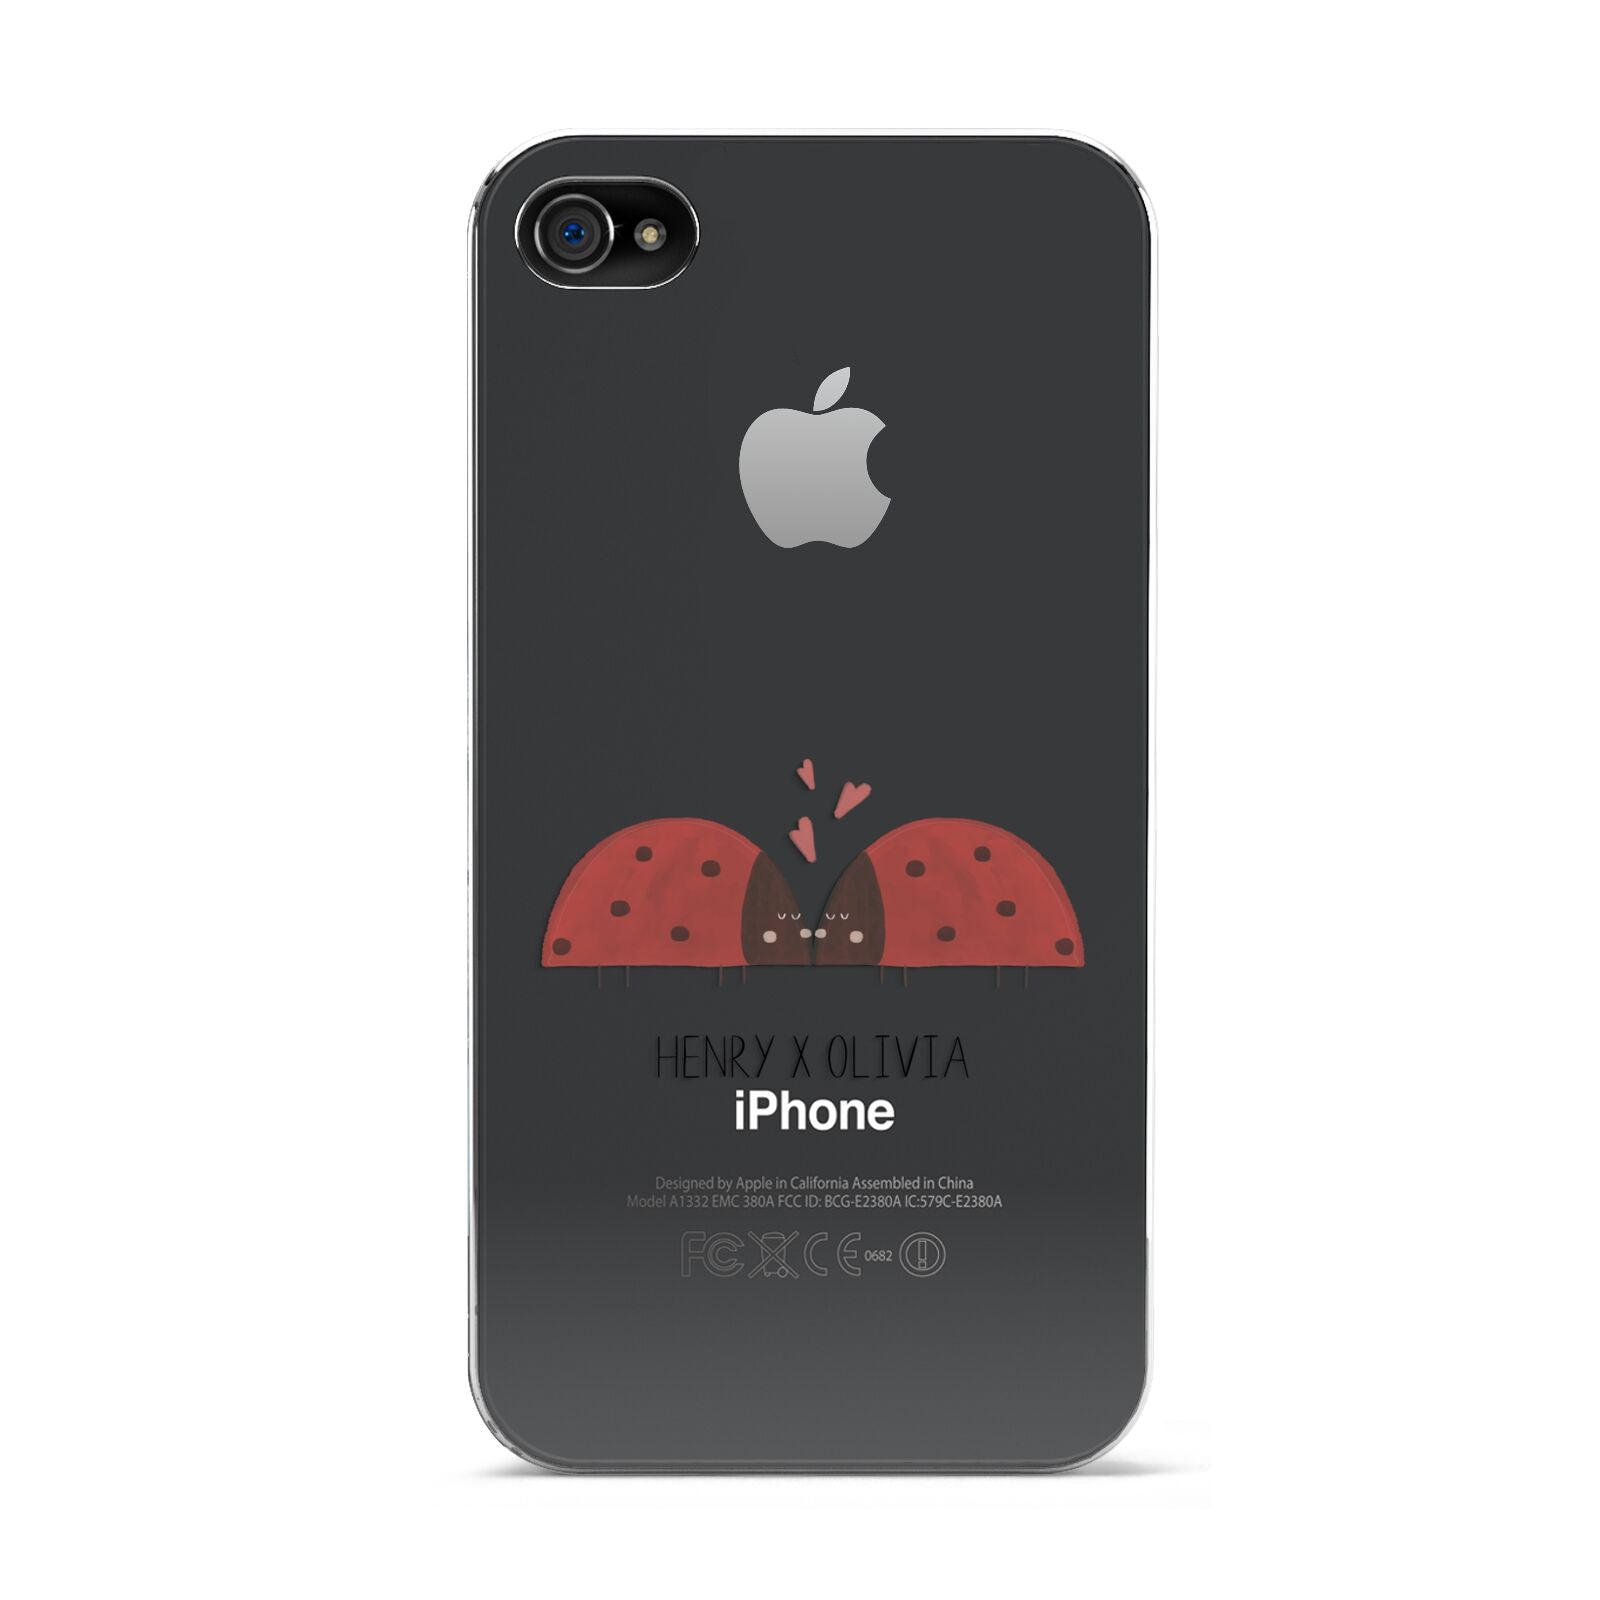 Two Ladybirds Apple iPhone 4s Case